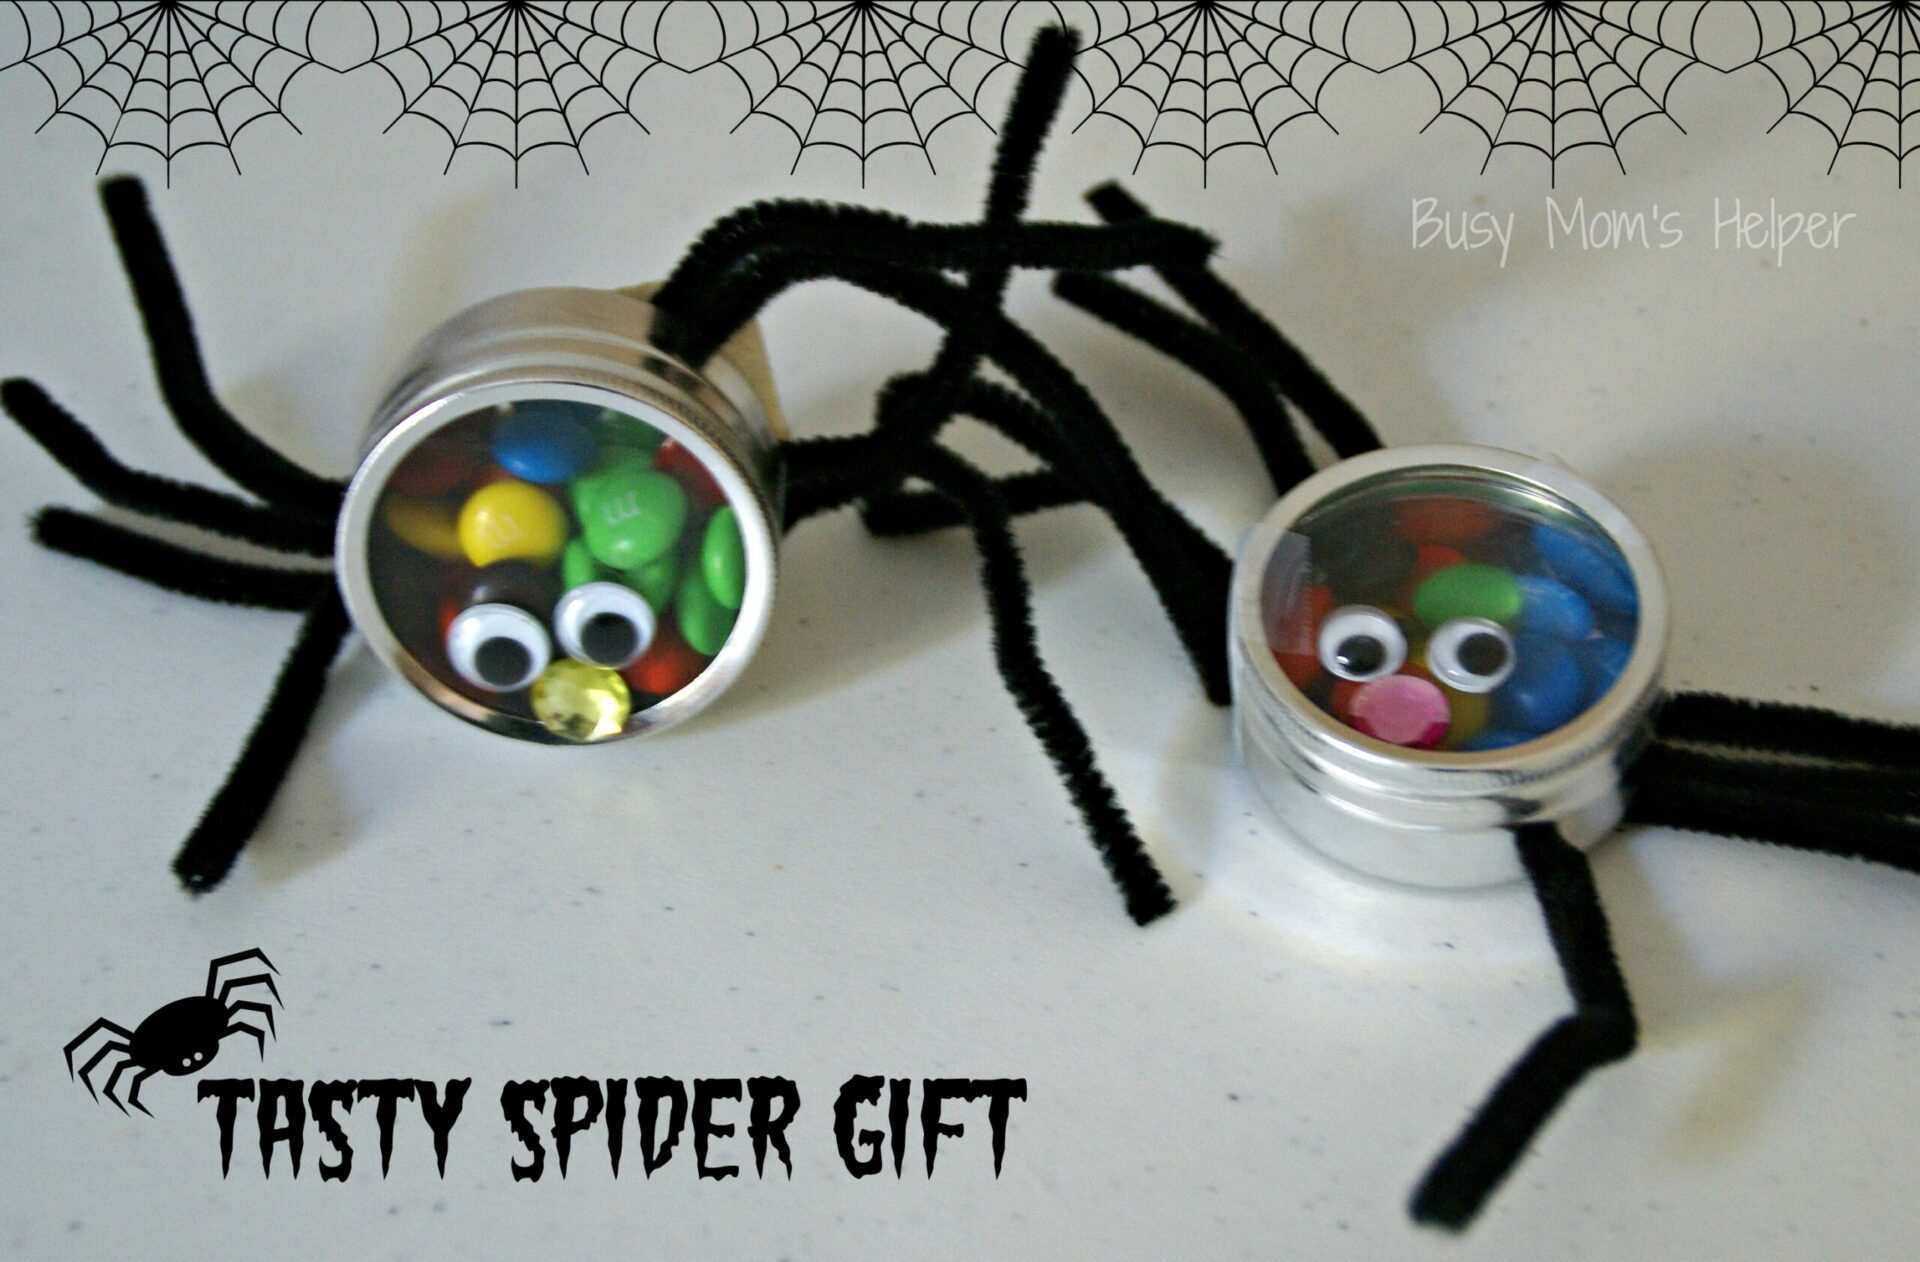 Tasty Spider Gift / Busy Mom's Helper